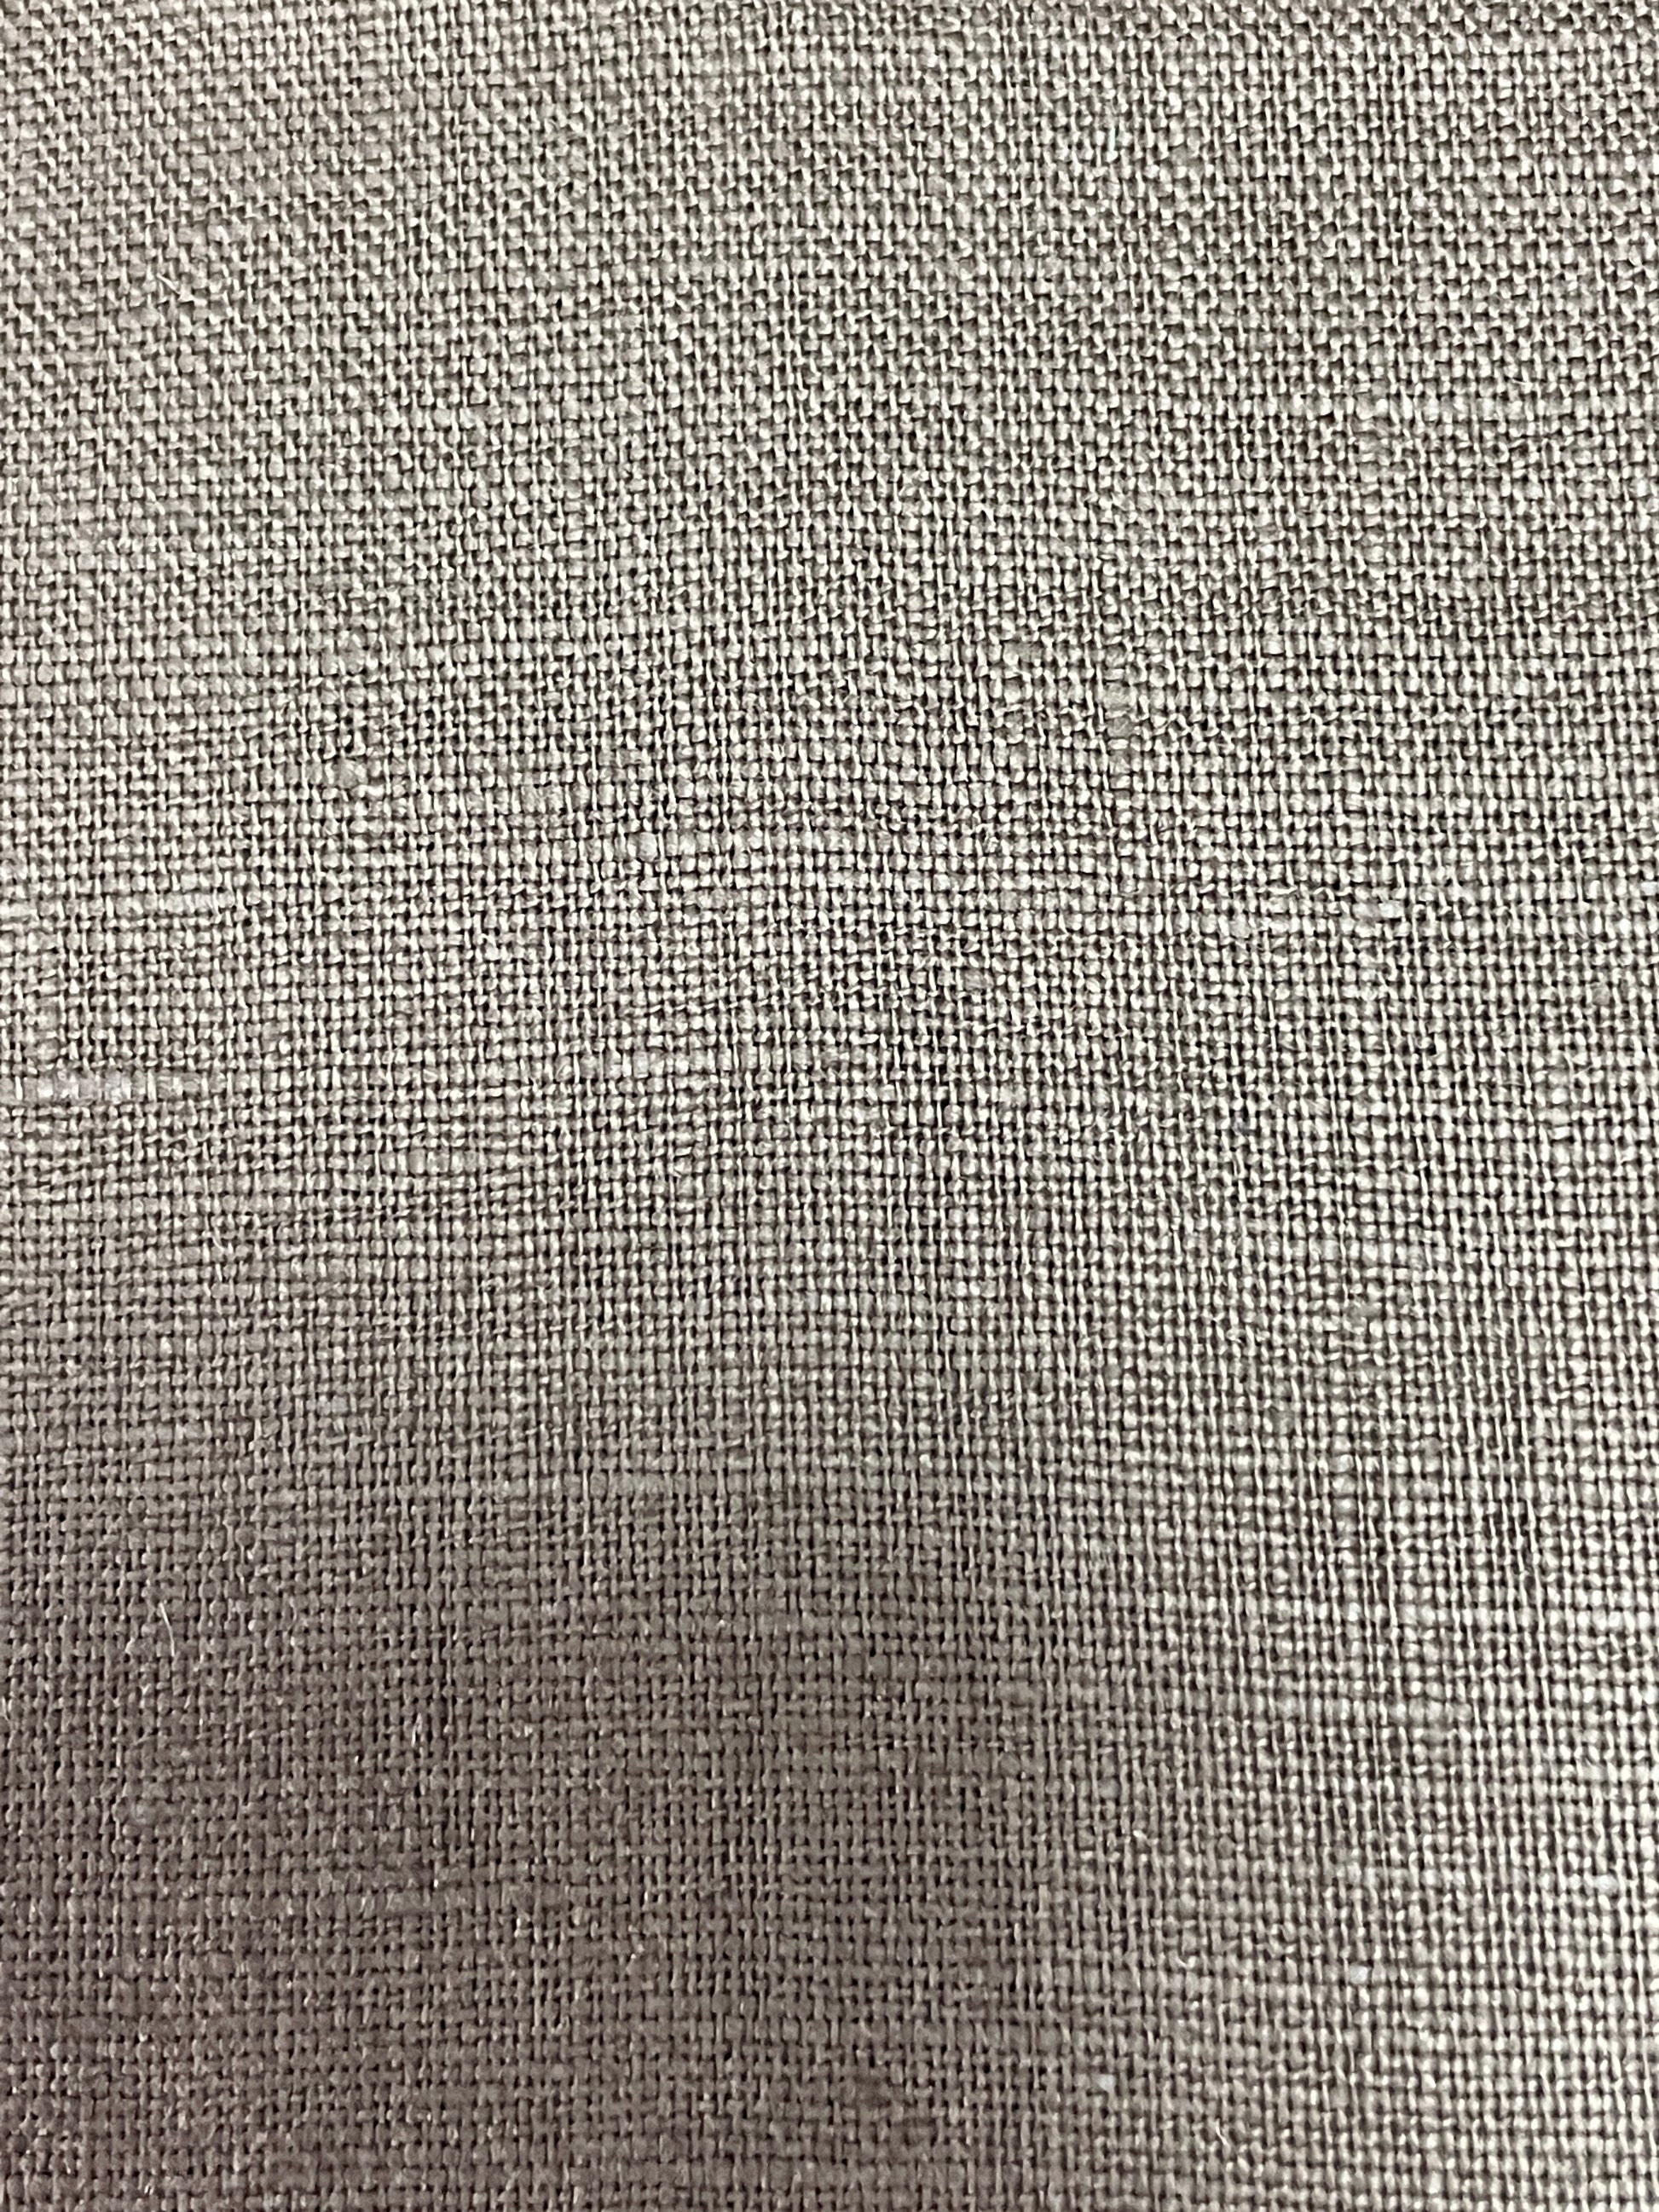 100% Linen Solid Color Fabric - Natasha Fabric